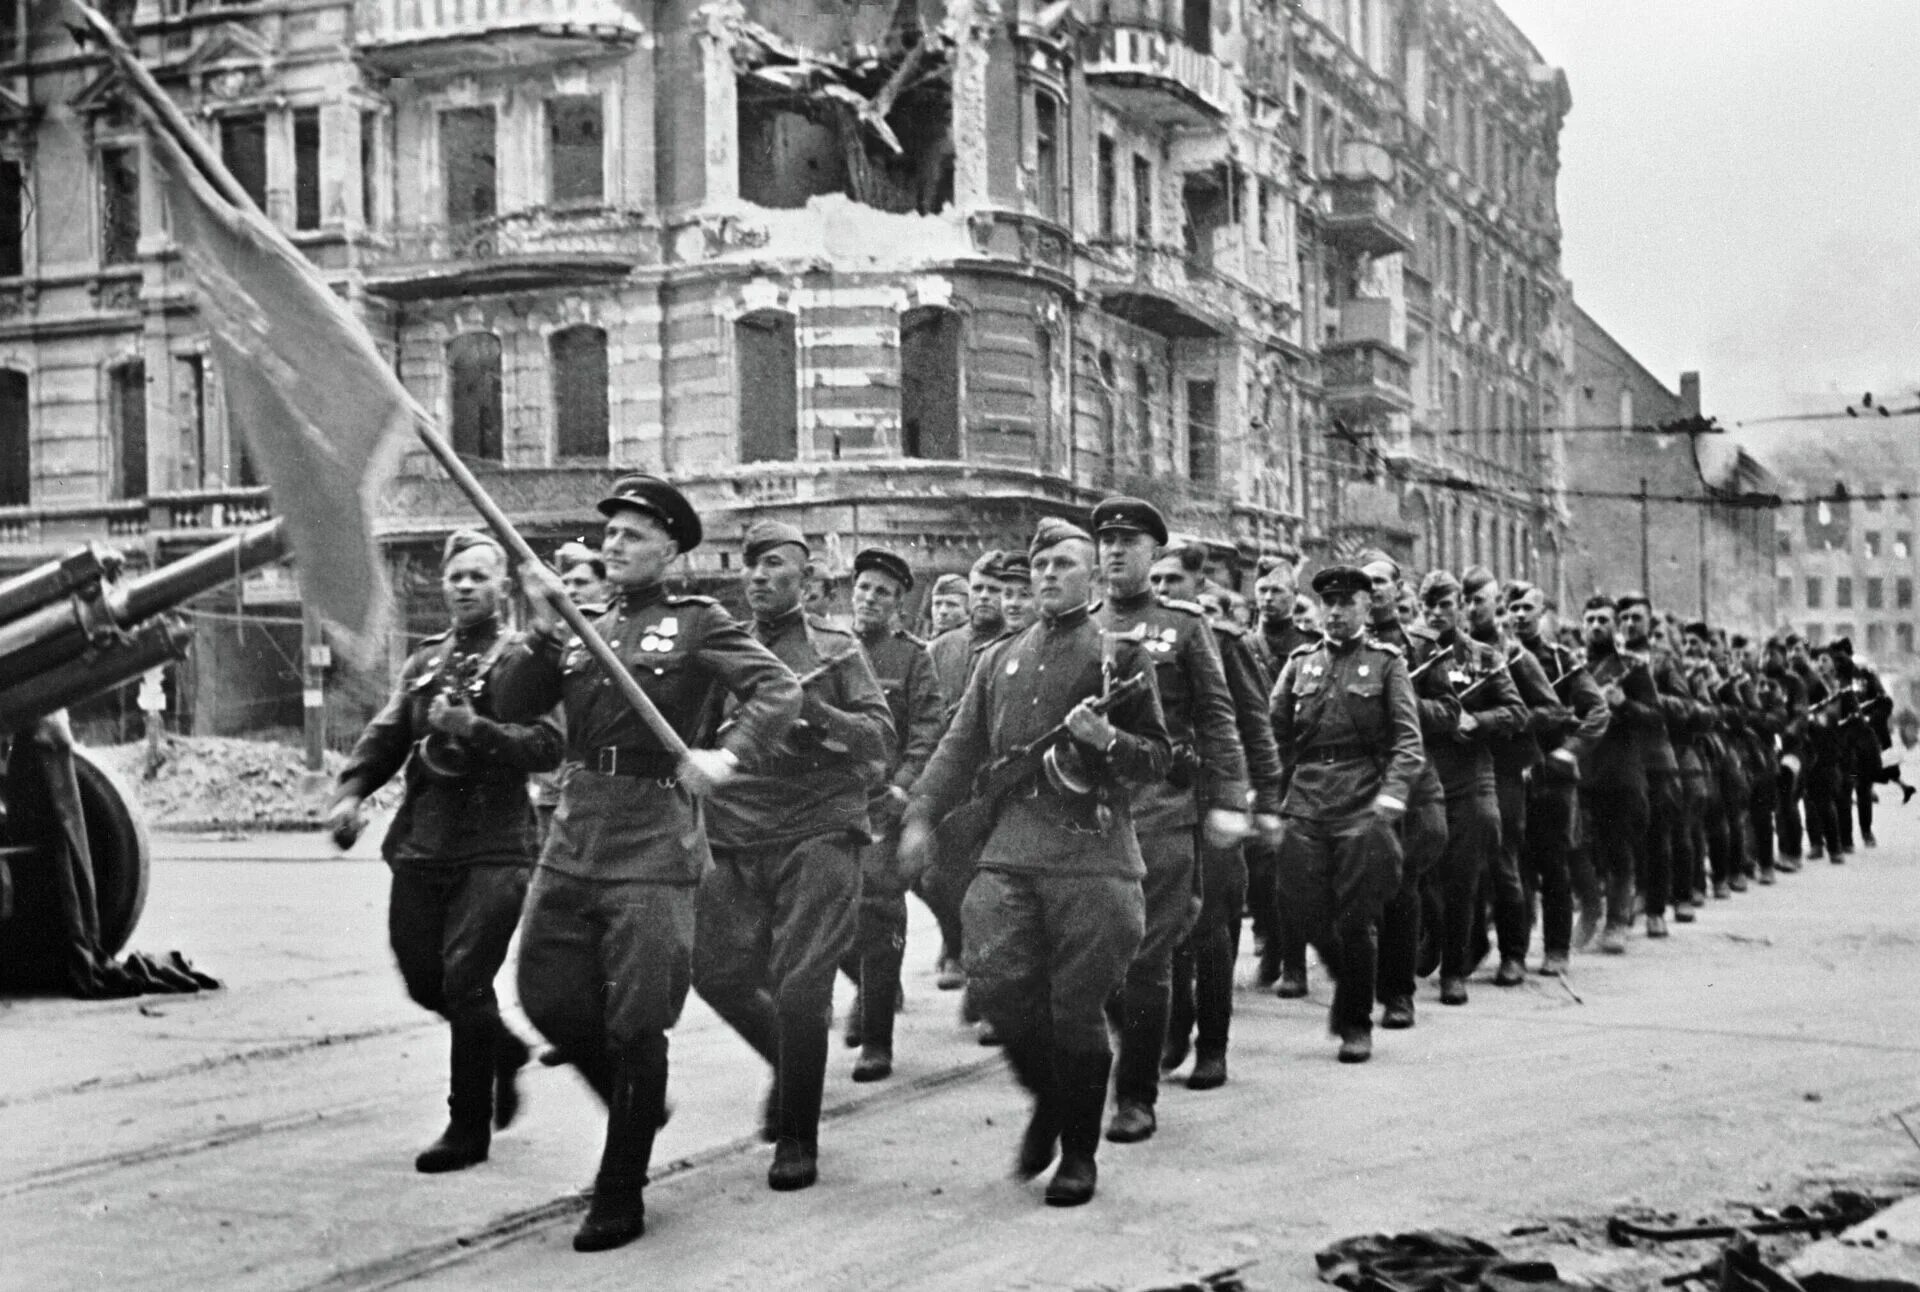 Парад победы солдаты. Солдаты красной армии 1945 Берлин. Парад Победы в Берлине 4 мая 1945 года. Советская армия в Берлине 1945. Советские солдаты в Берлине 1945.